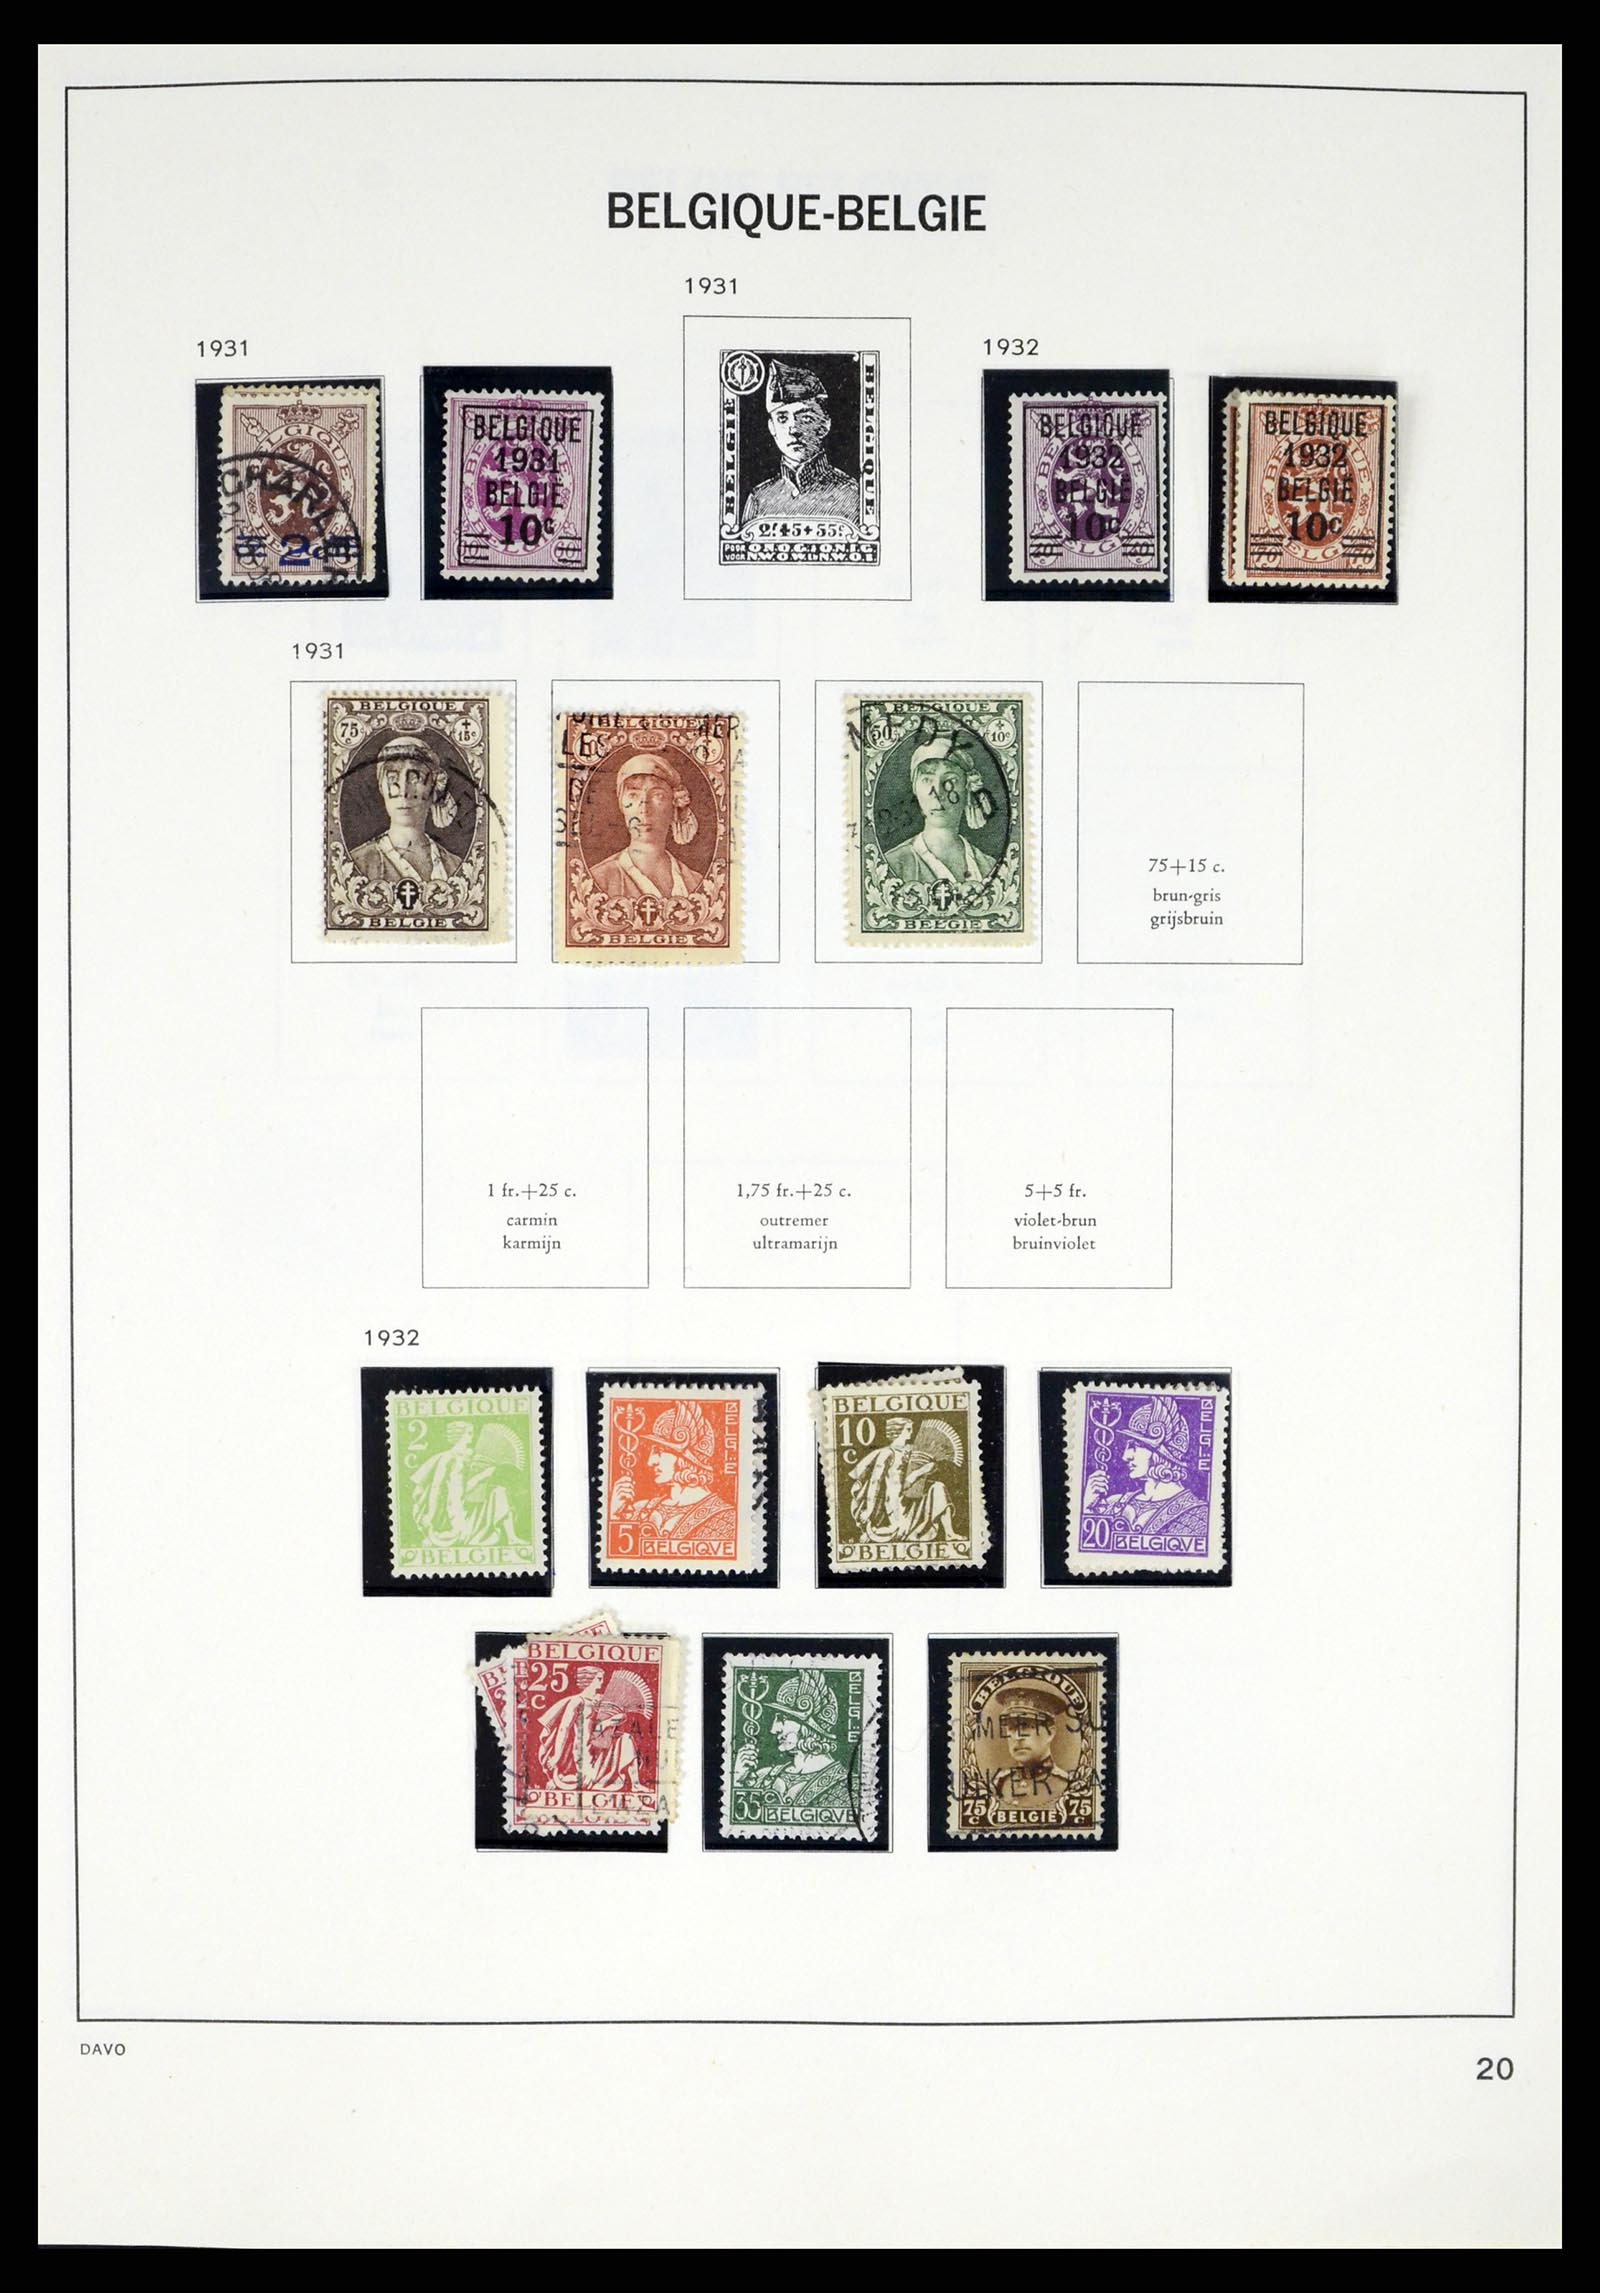 37367 019 - Stamp collection 37367 Belgium 1849-2003.